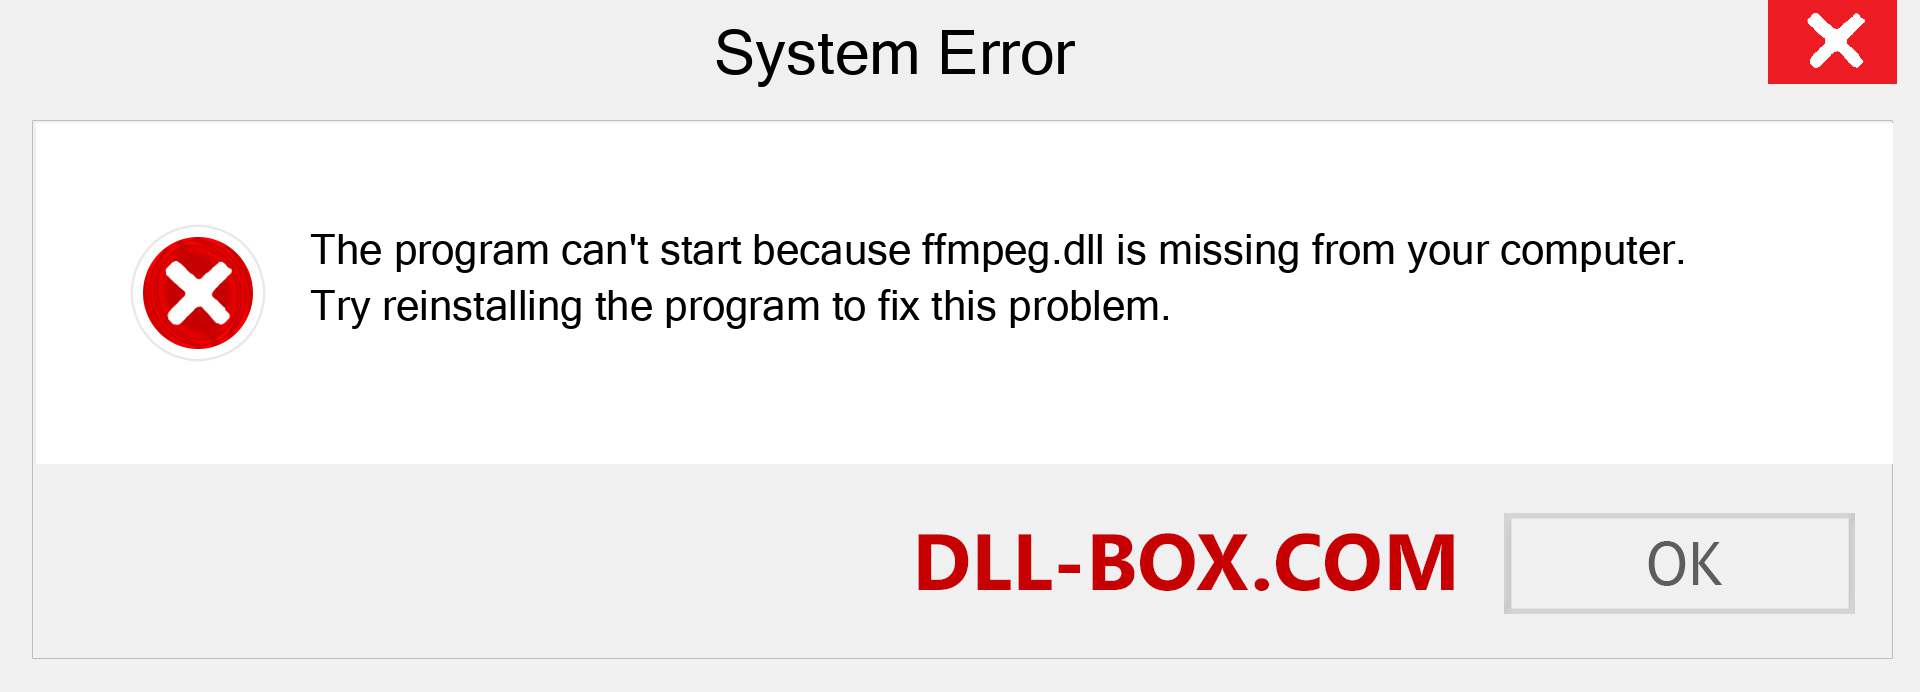 Ffmpeg Dll Free Download For Windows Dll Box Com